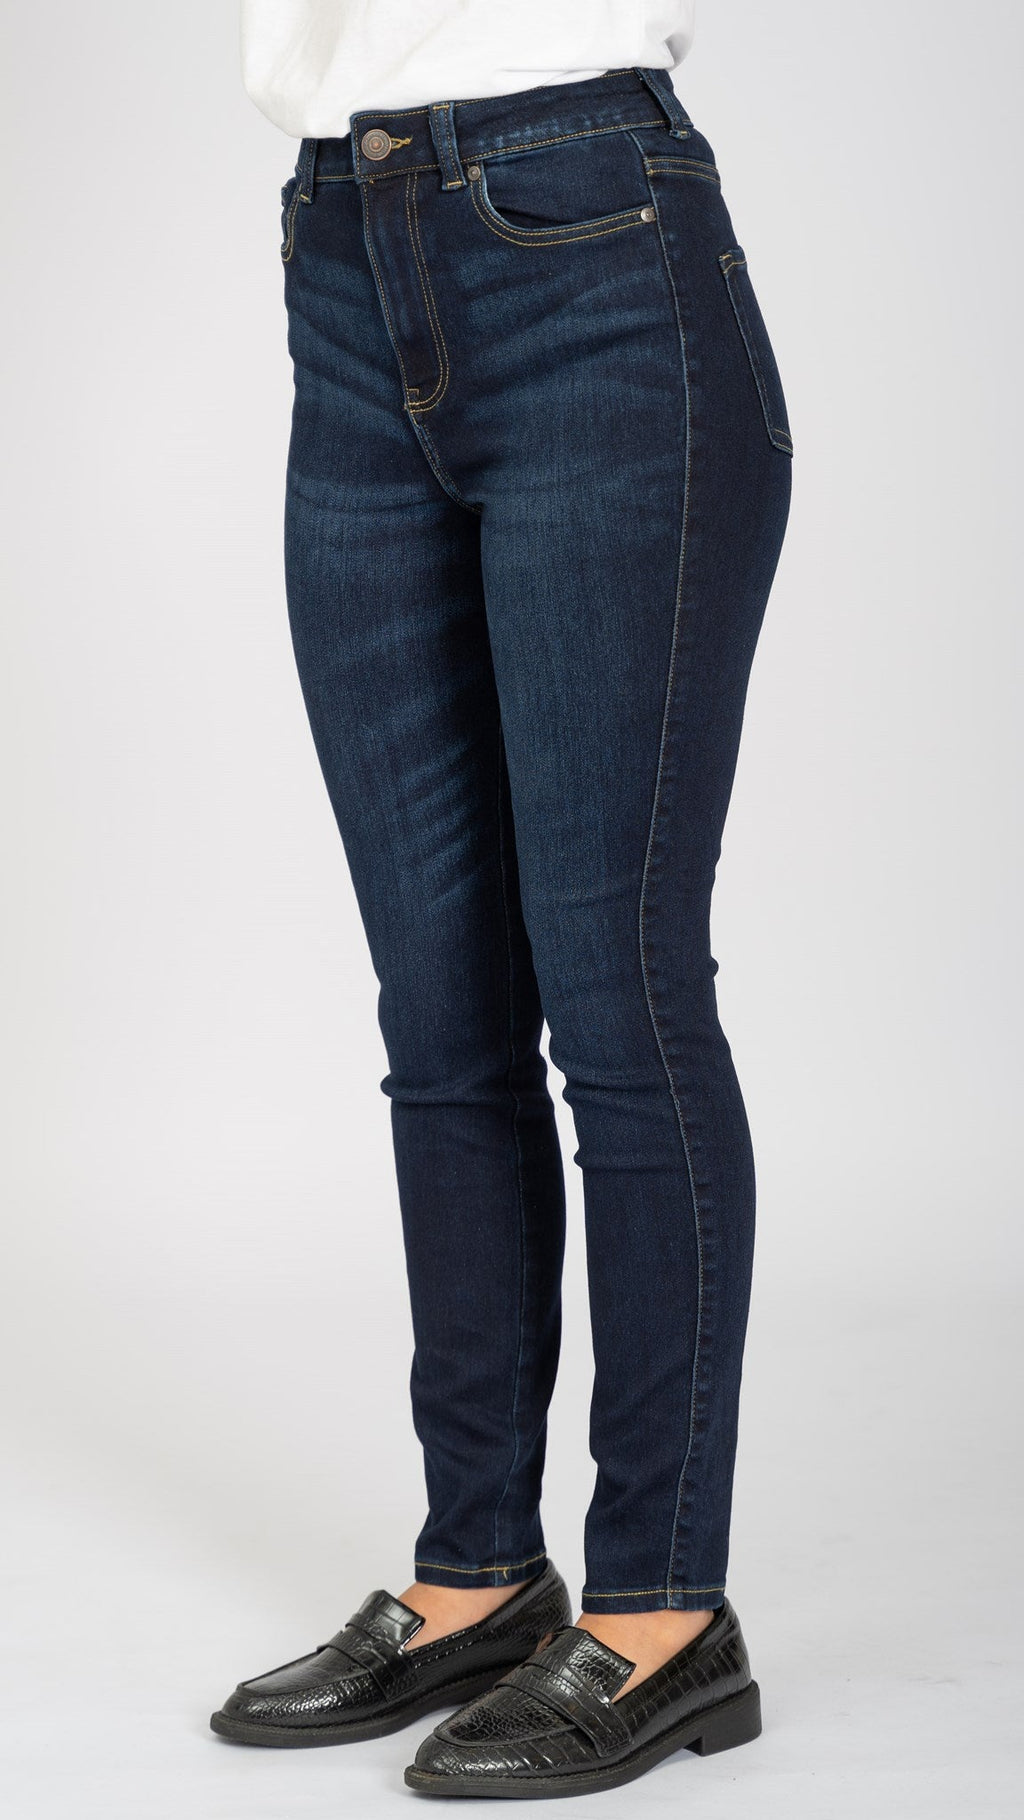 Le jean skinny de performance original - Donim bleu foncé